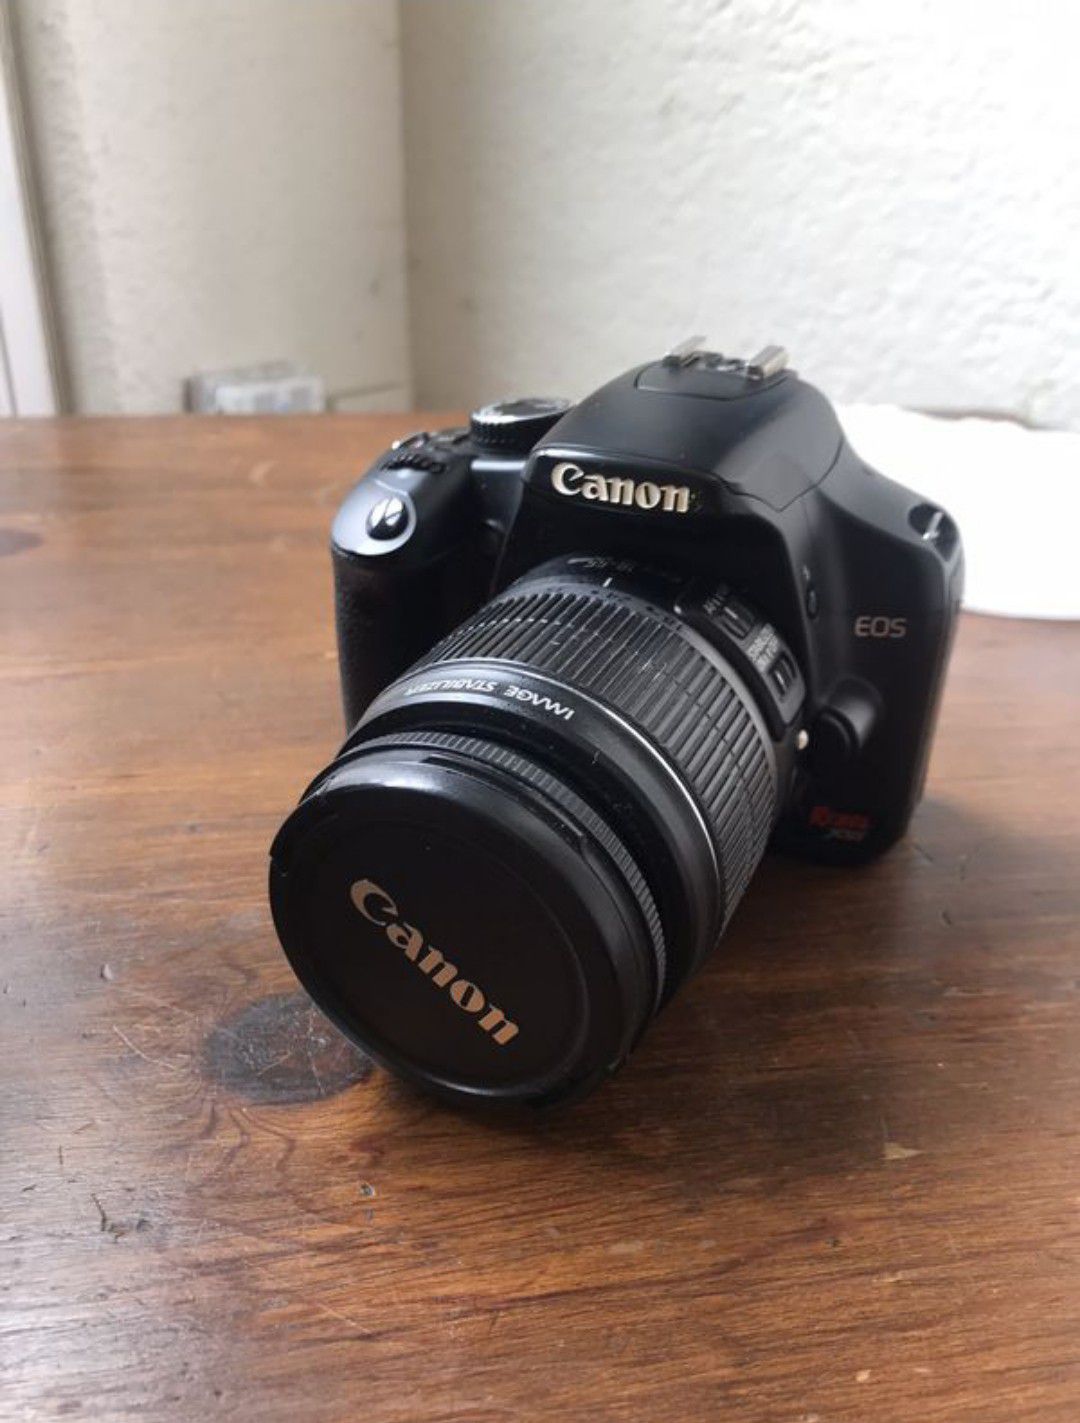 Canon rebel XSI DSLR Camera with Canon EFS 18-55 mm slr lense